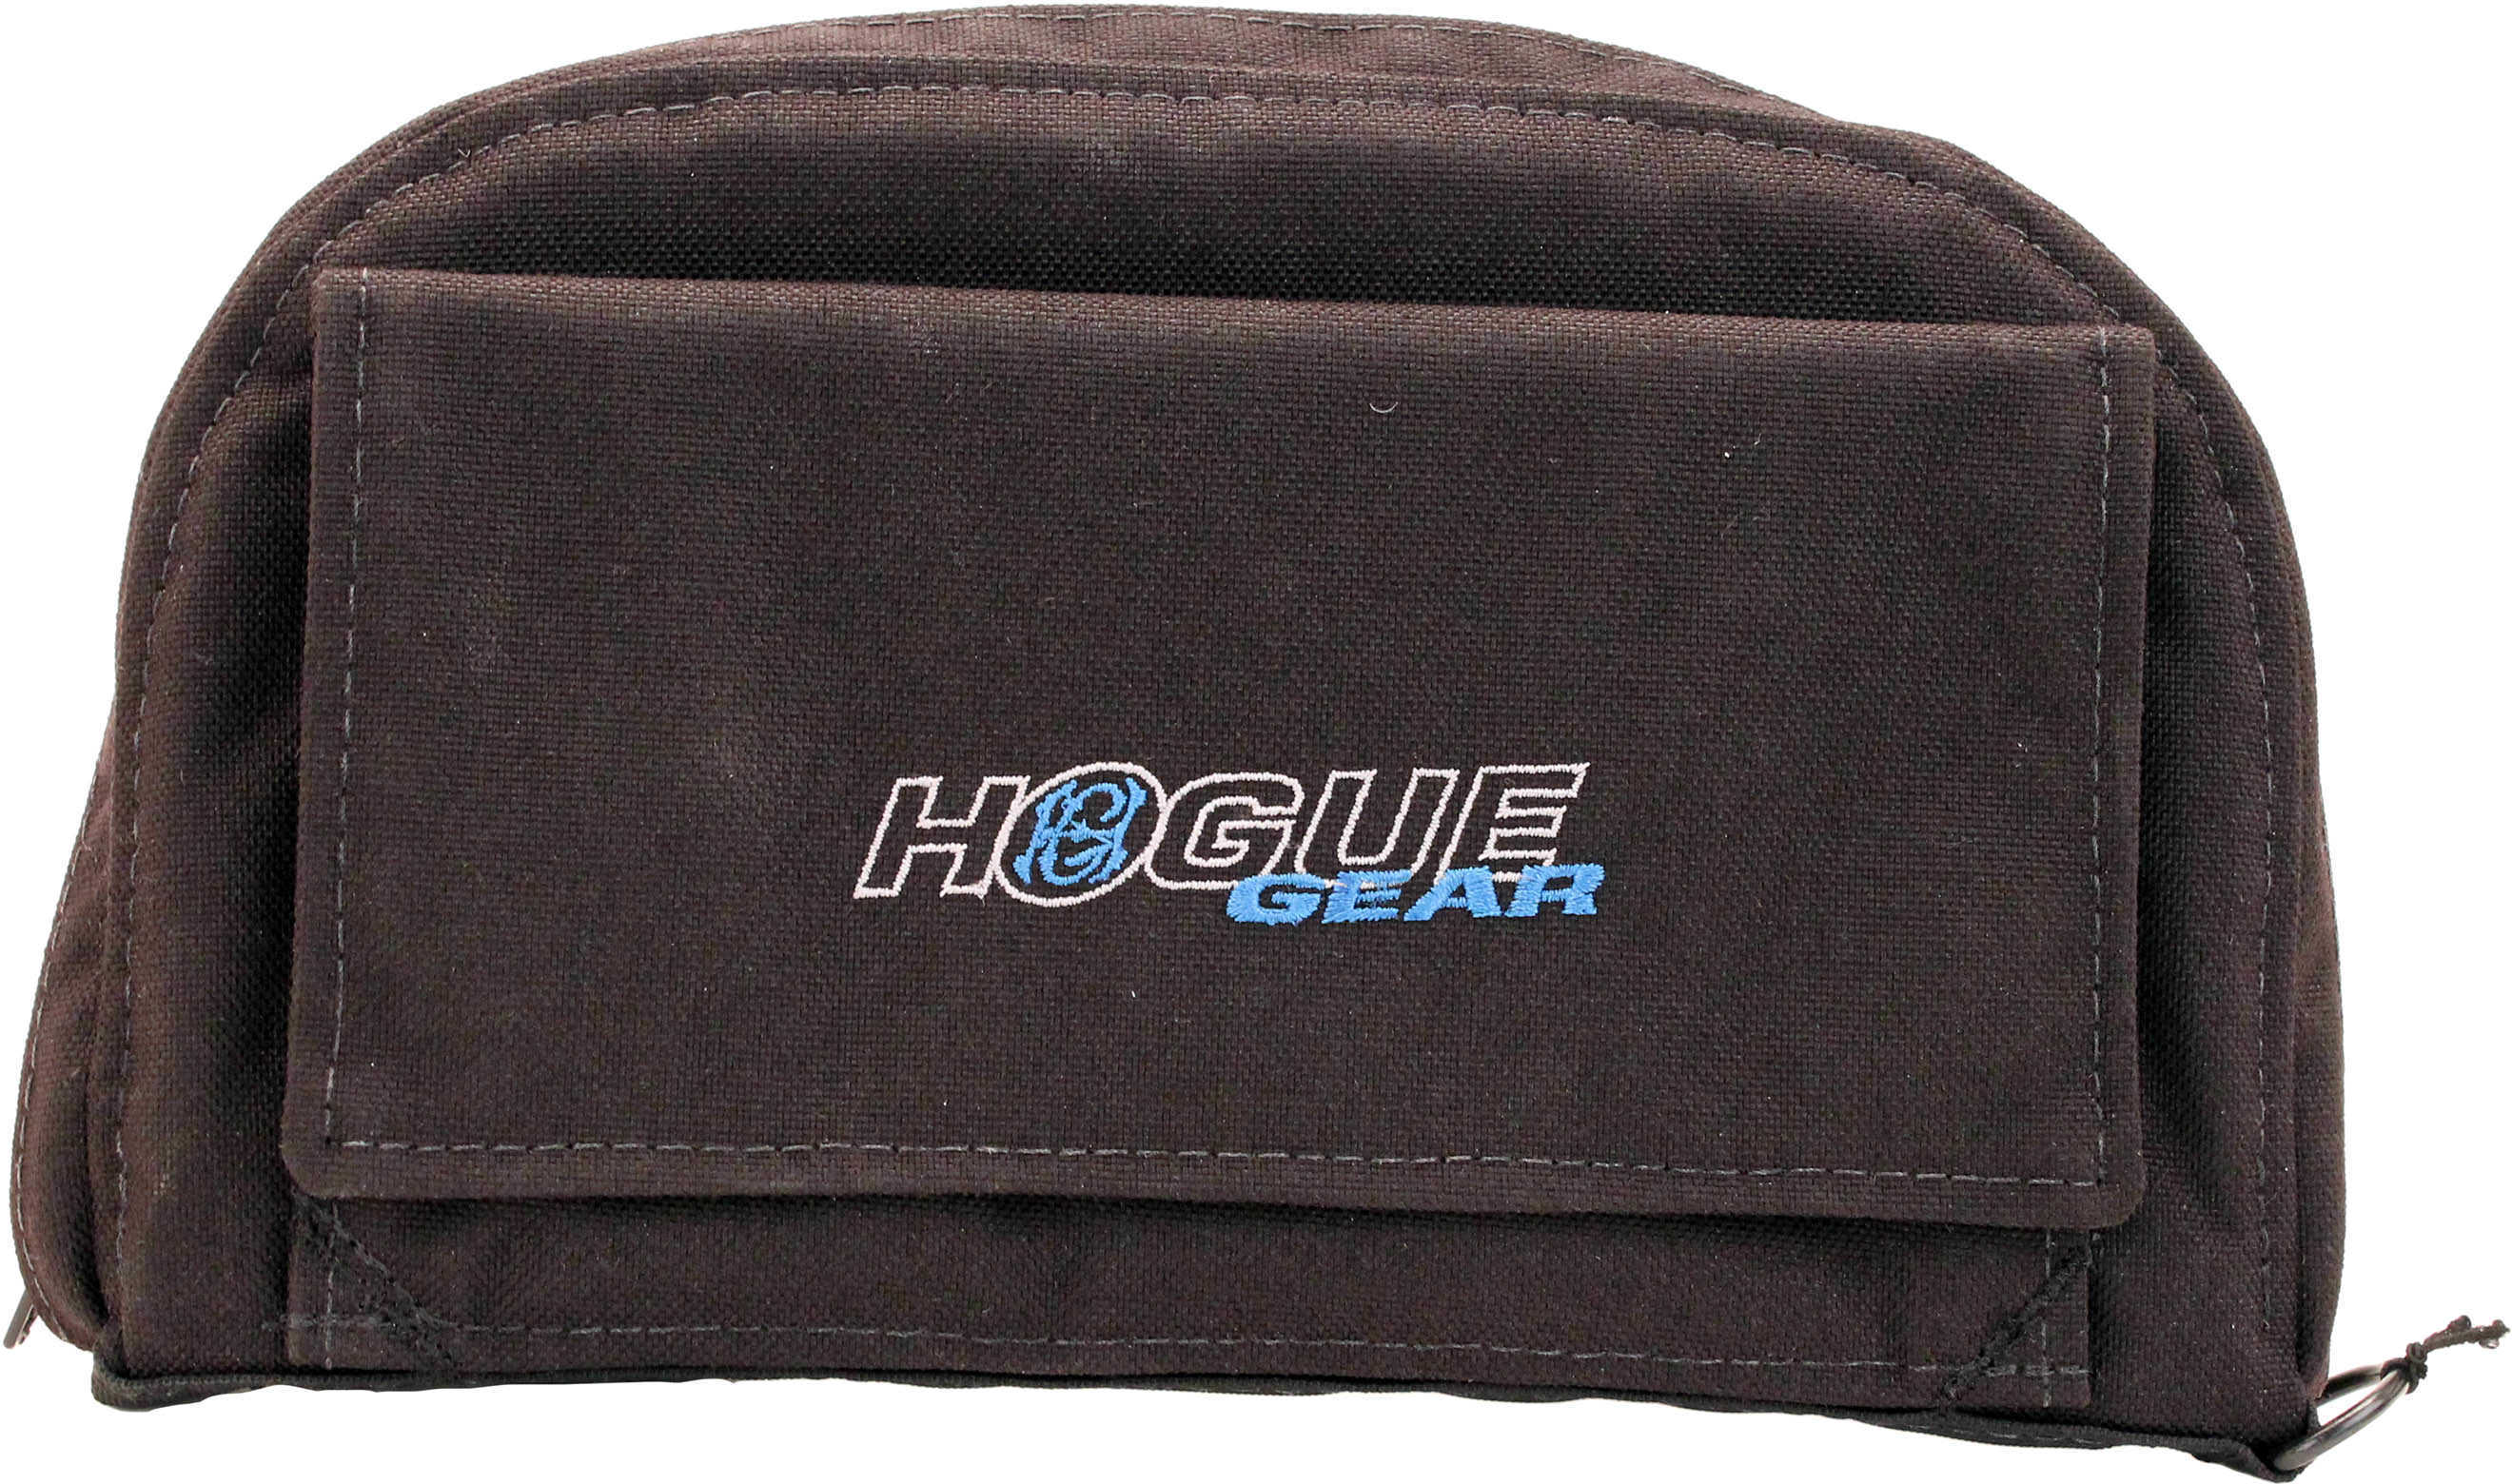 Hogue 59230 Range Bag Small Pistol Gun Case Nylon 9"X12" Black